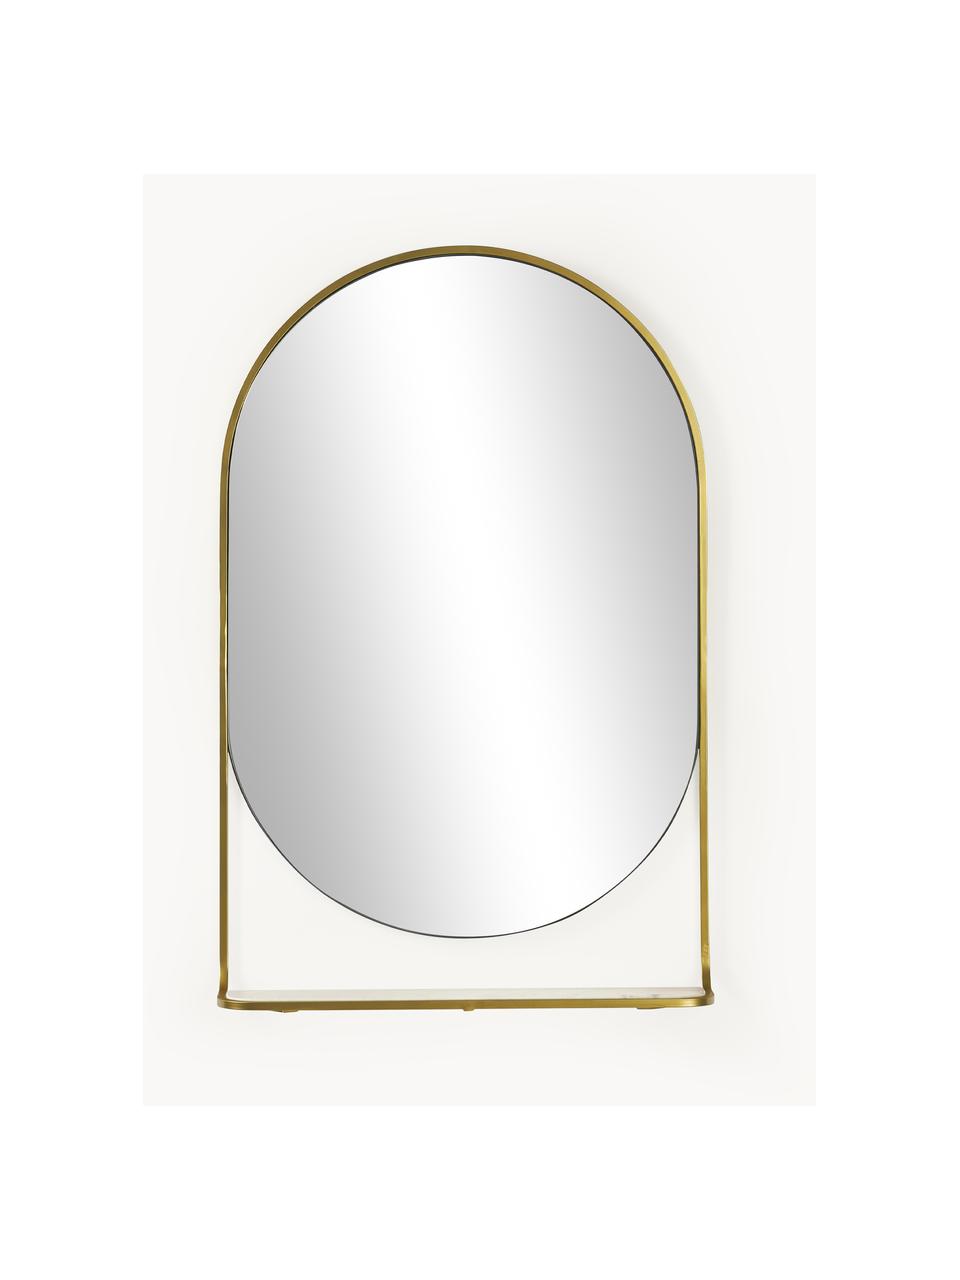 Oválné nástěnné zrcadlo s policí z mramoru Verena, Zlatá, Š 60 cm, V 90 cm